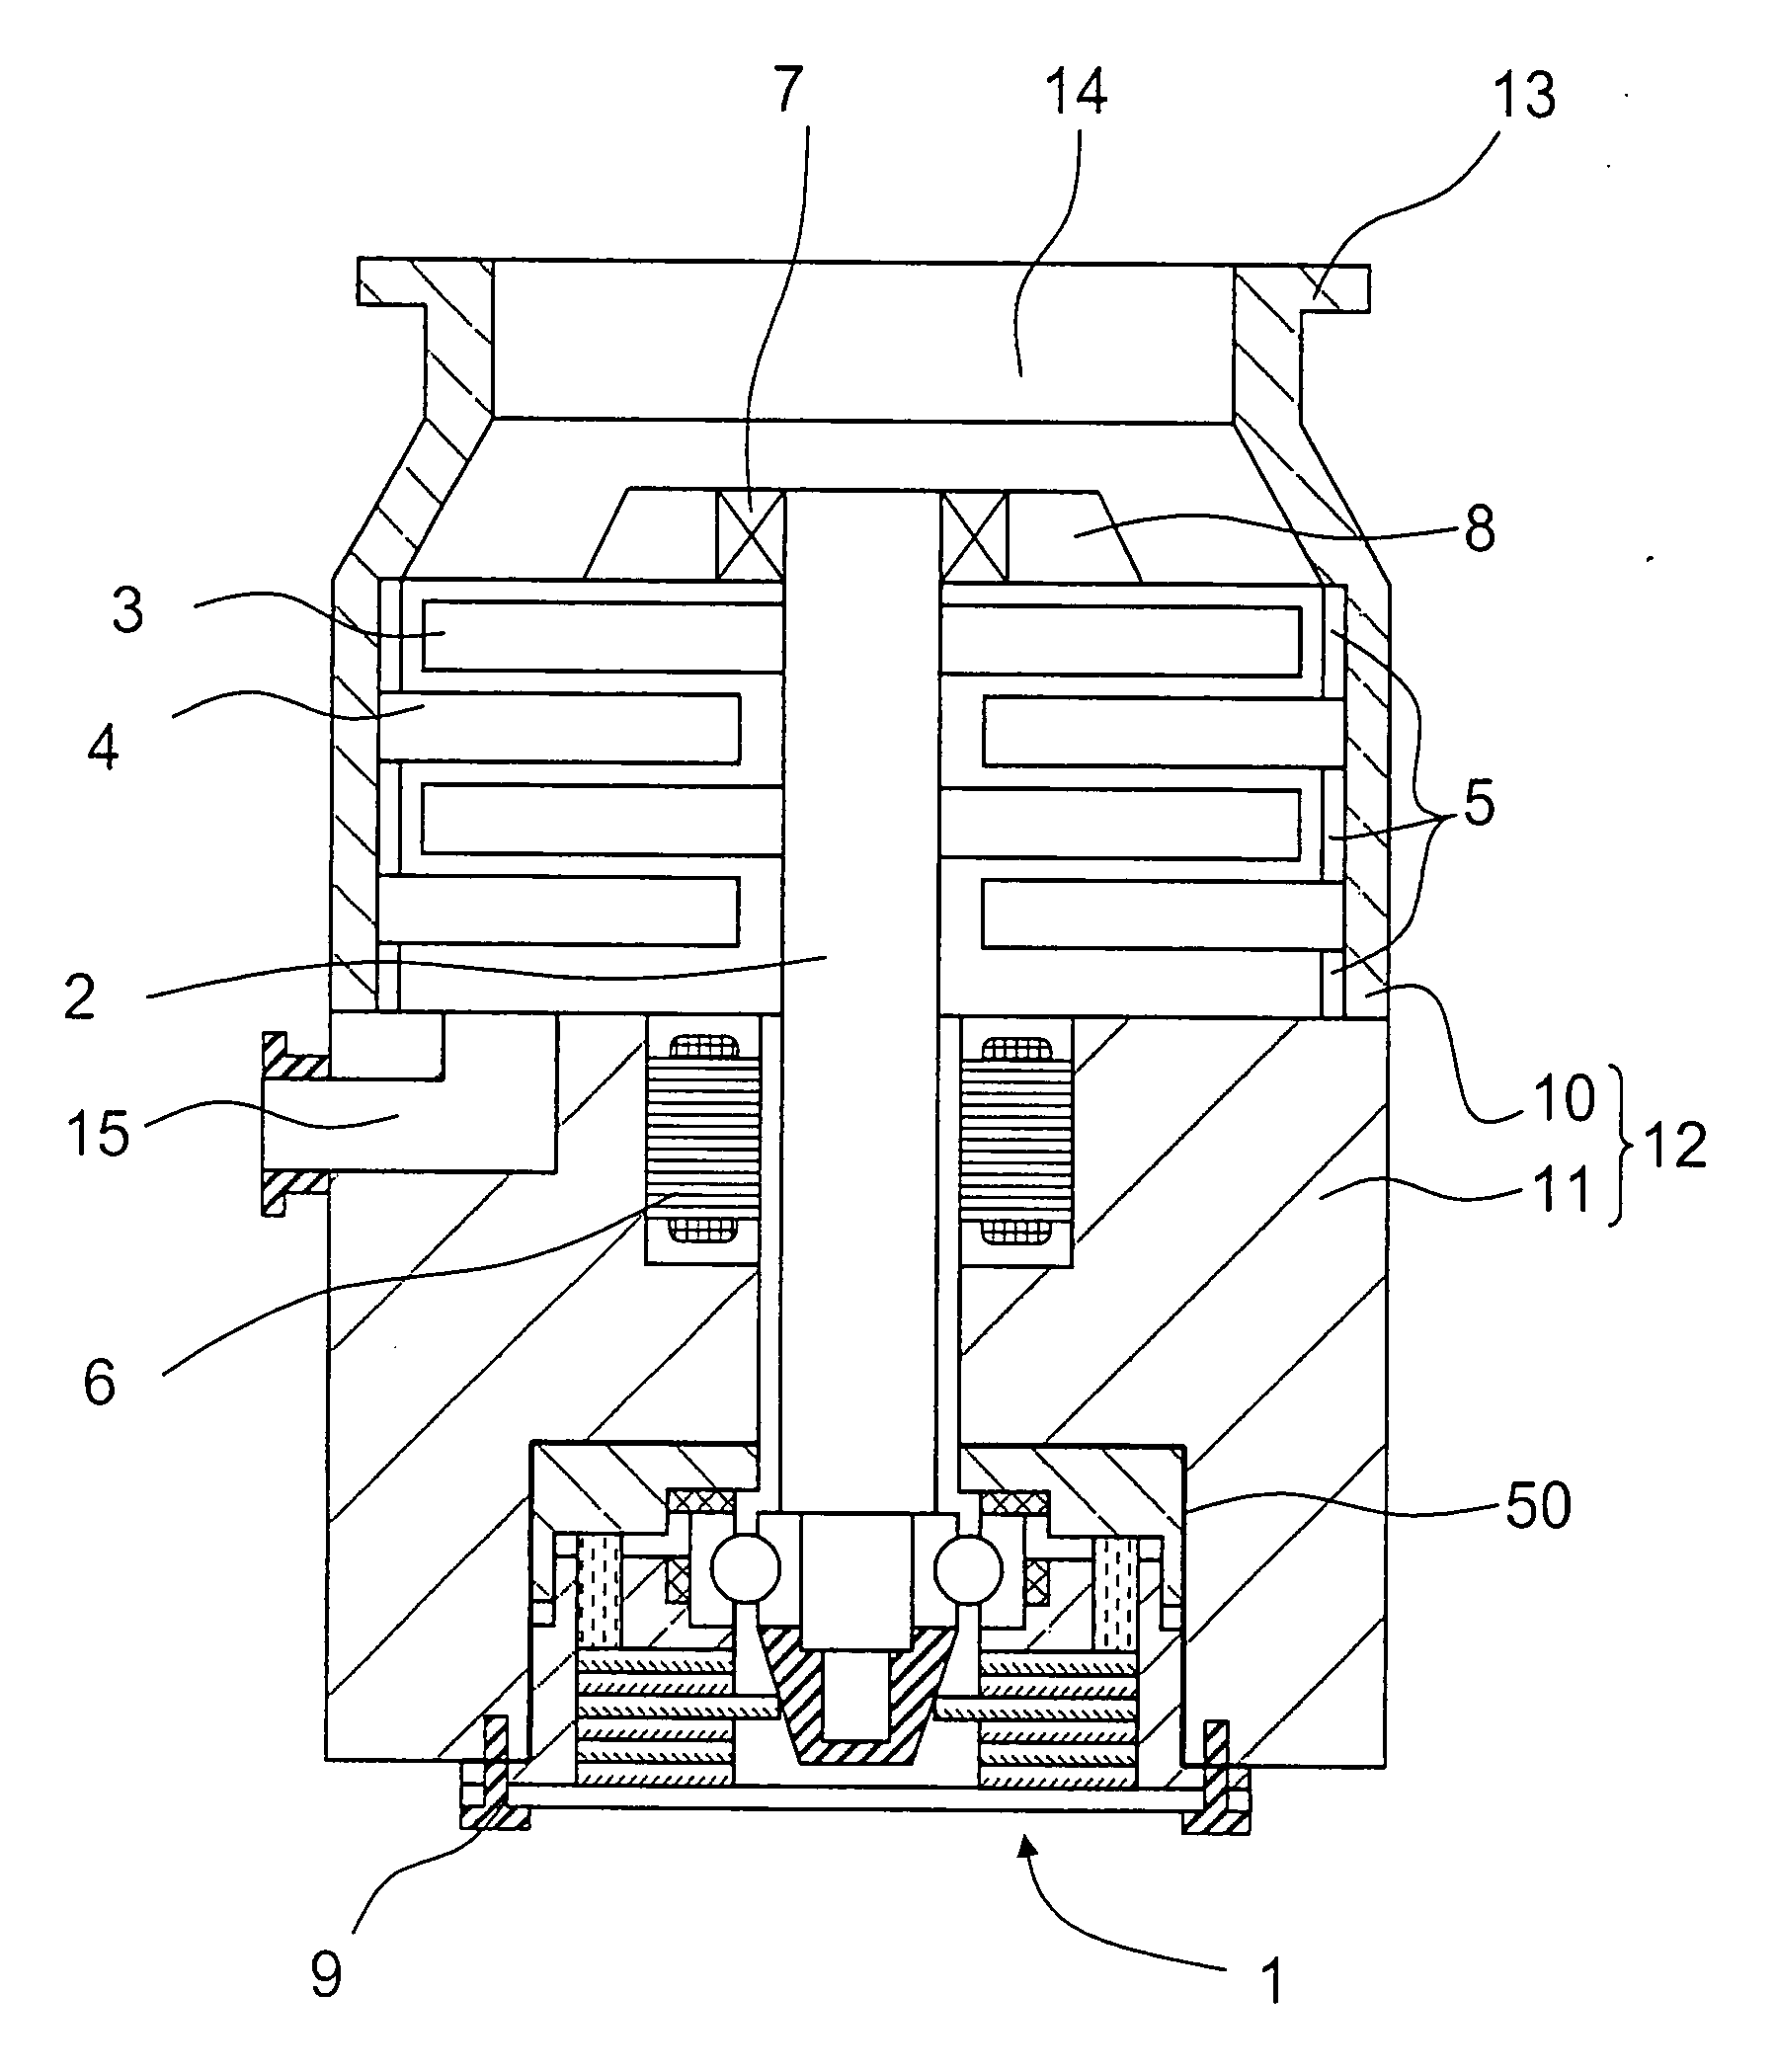 Bearing module for a vacuum pump